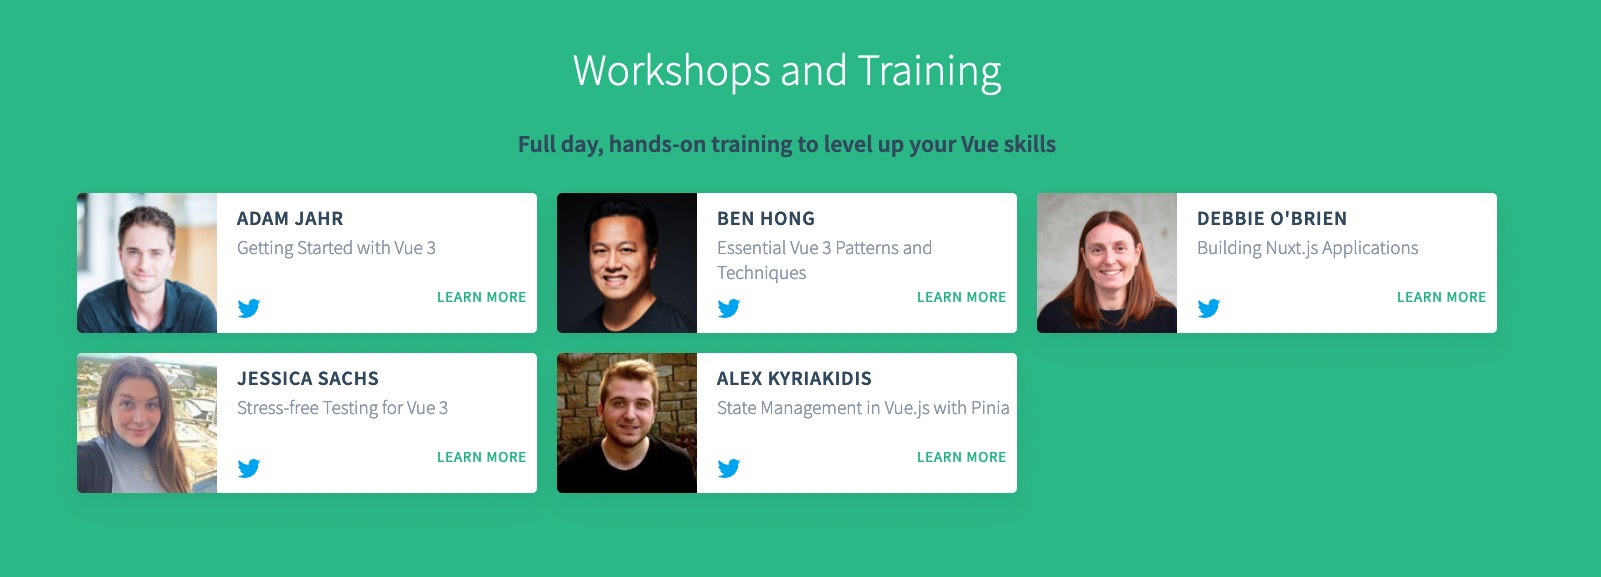 screenshot of workshop lineup